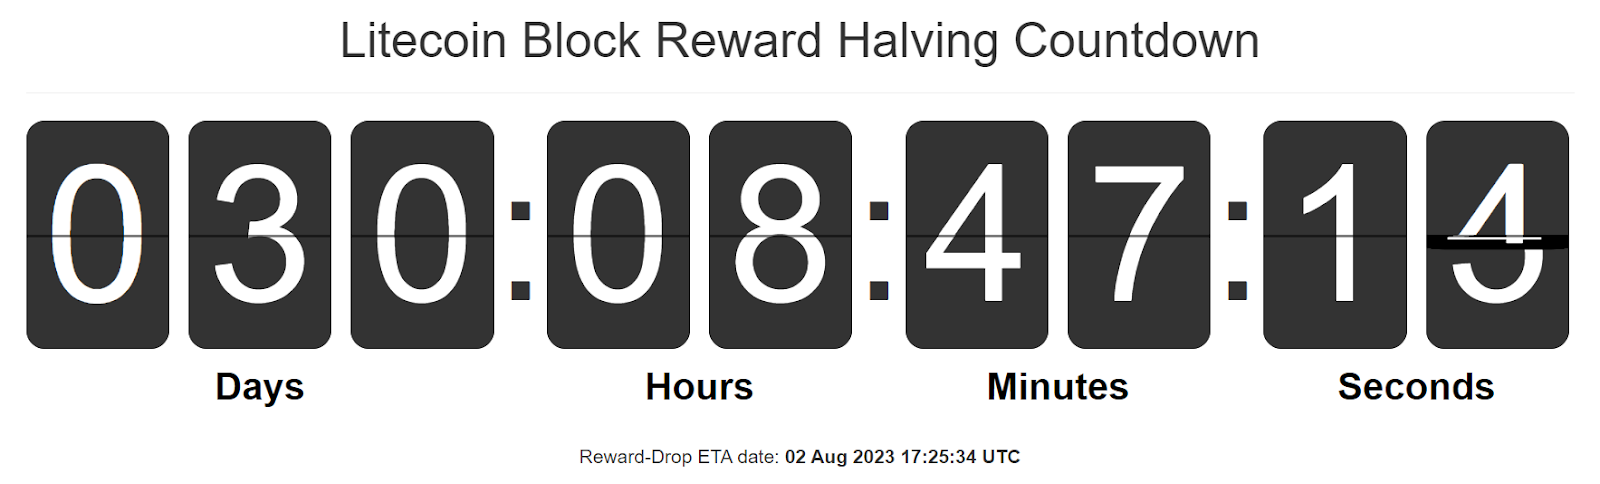 Countdown clock for Litecoin’s block halving (03/07/23)